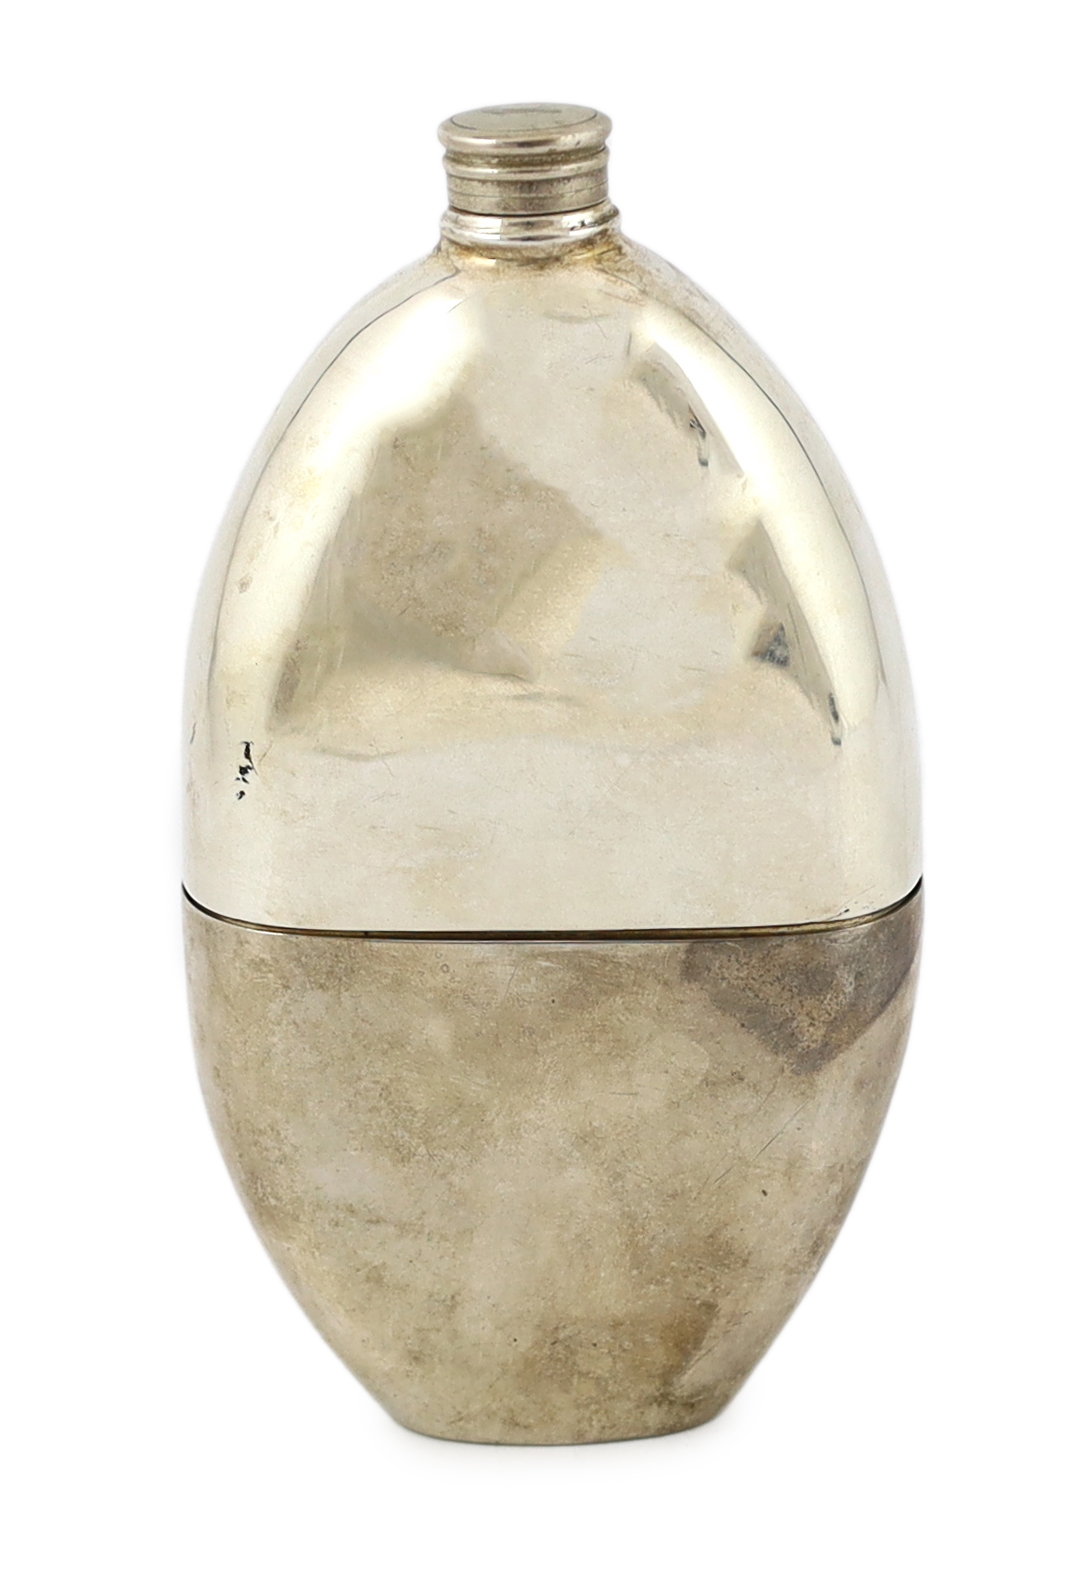 A George III silver hip flask, by Peter & Ann Bateman